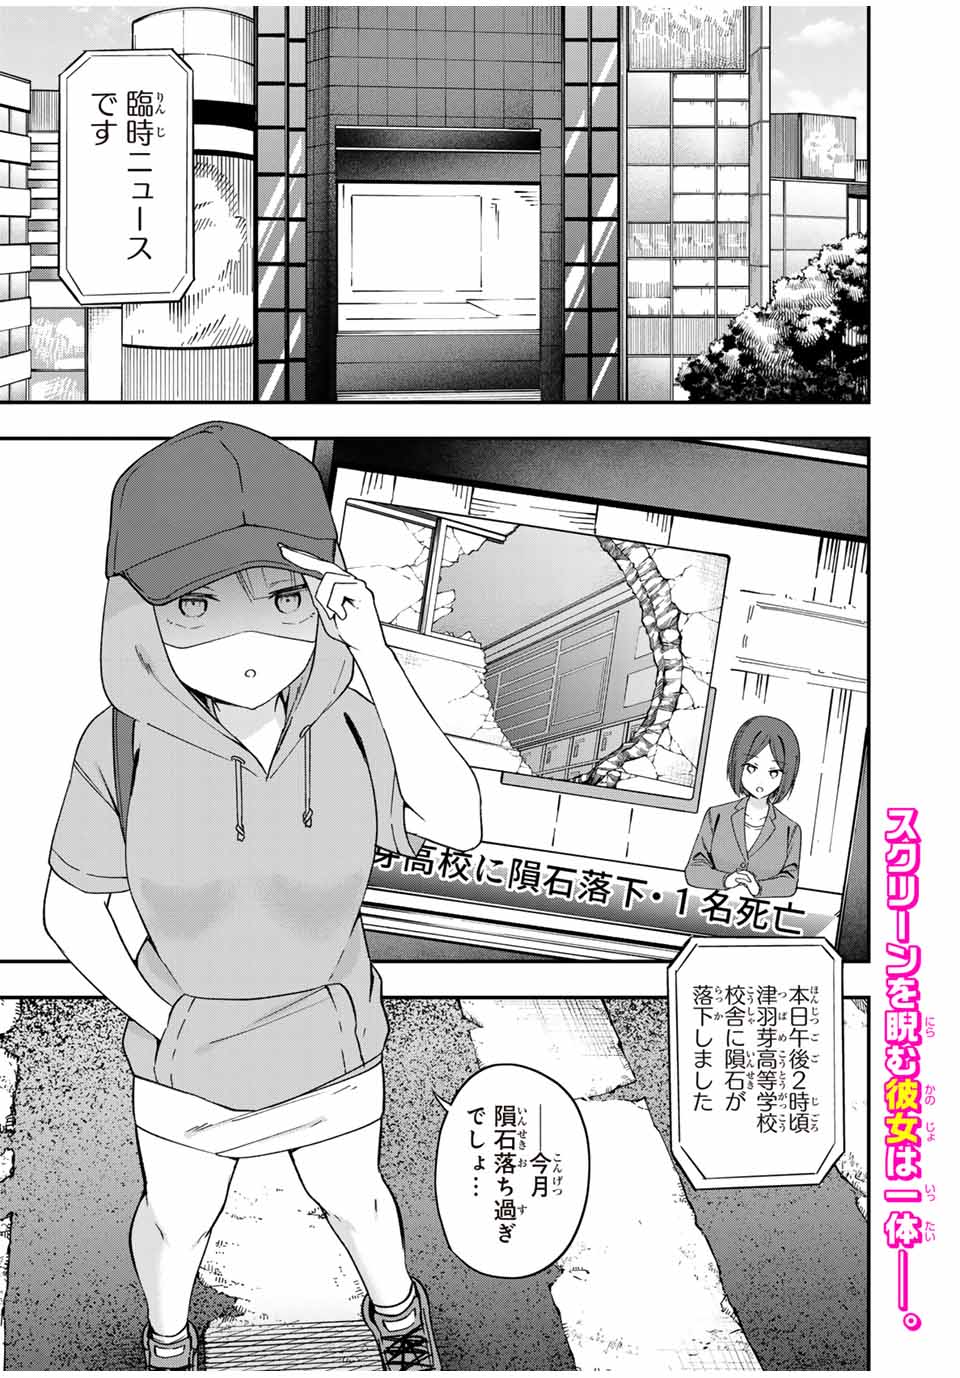 Heroine wa xx Okasegitai - Chapter 4 - Page 1